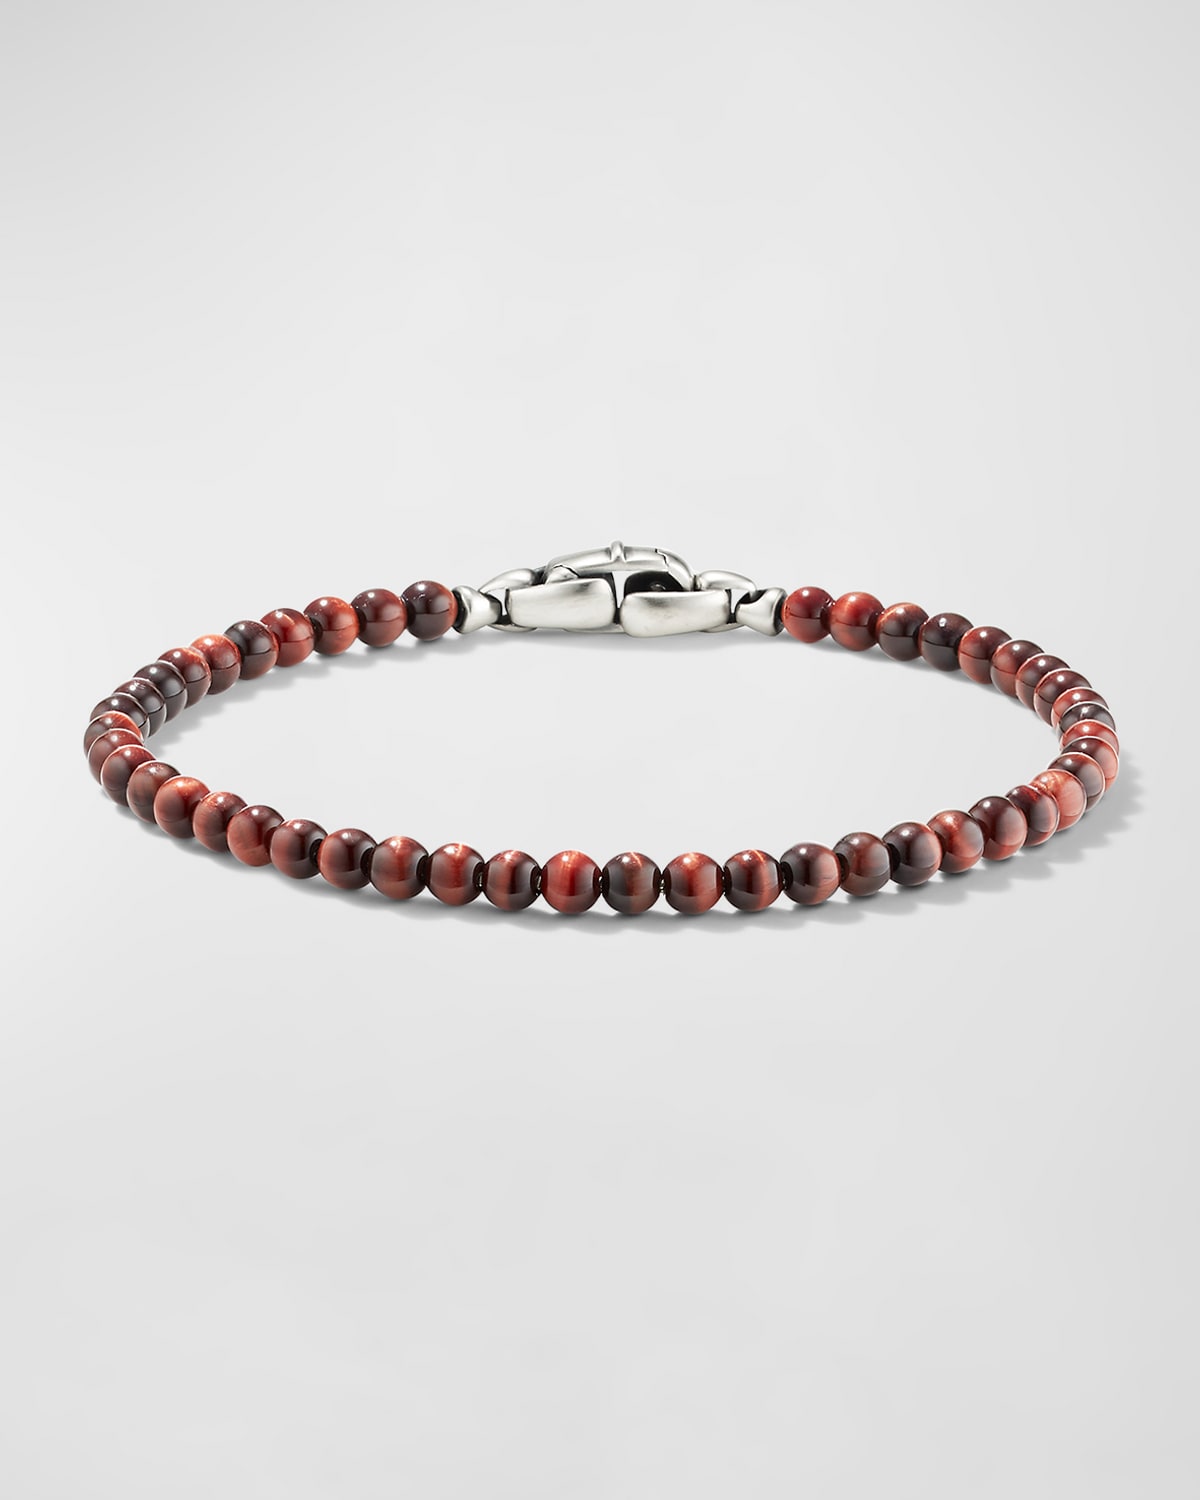 David Yurman Men's Spiritual Beads Bracelet In Silver With Red Tigers Eye, 4mm, 5.5"l In Red Tiger's Eye